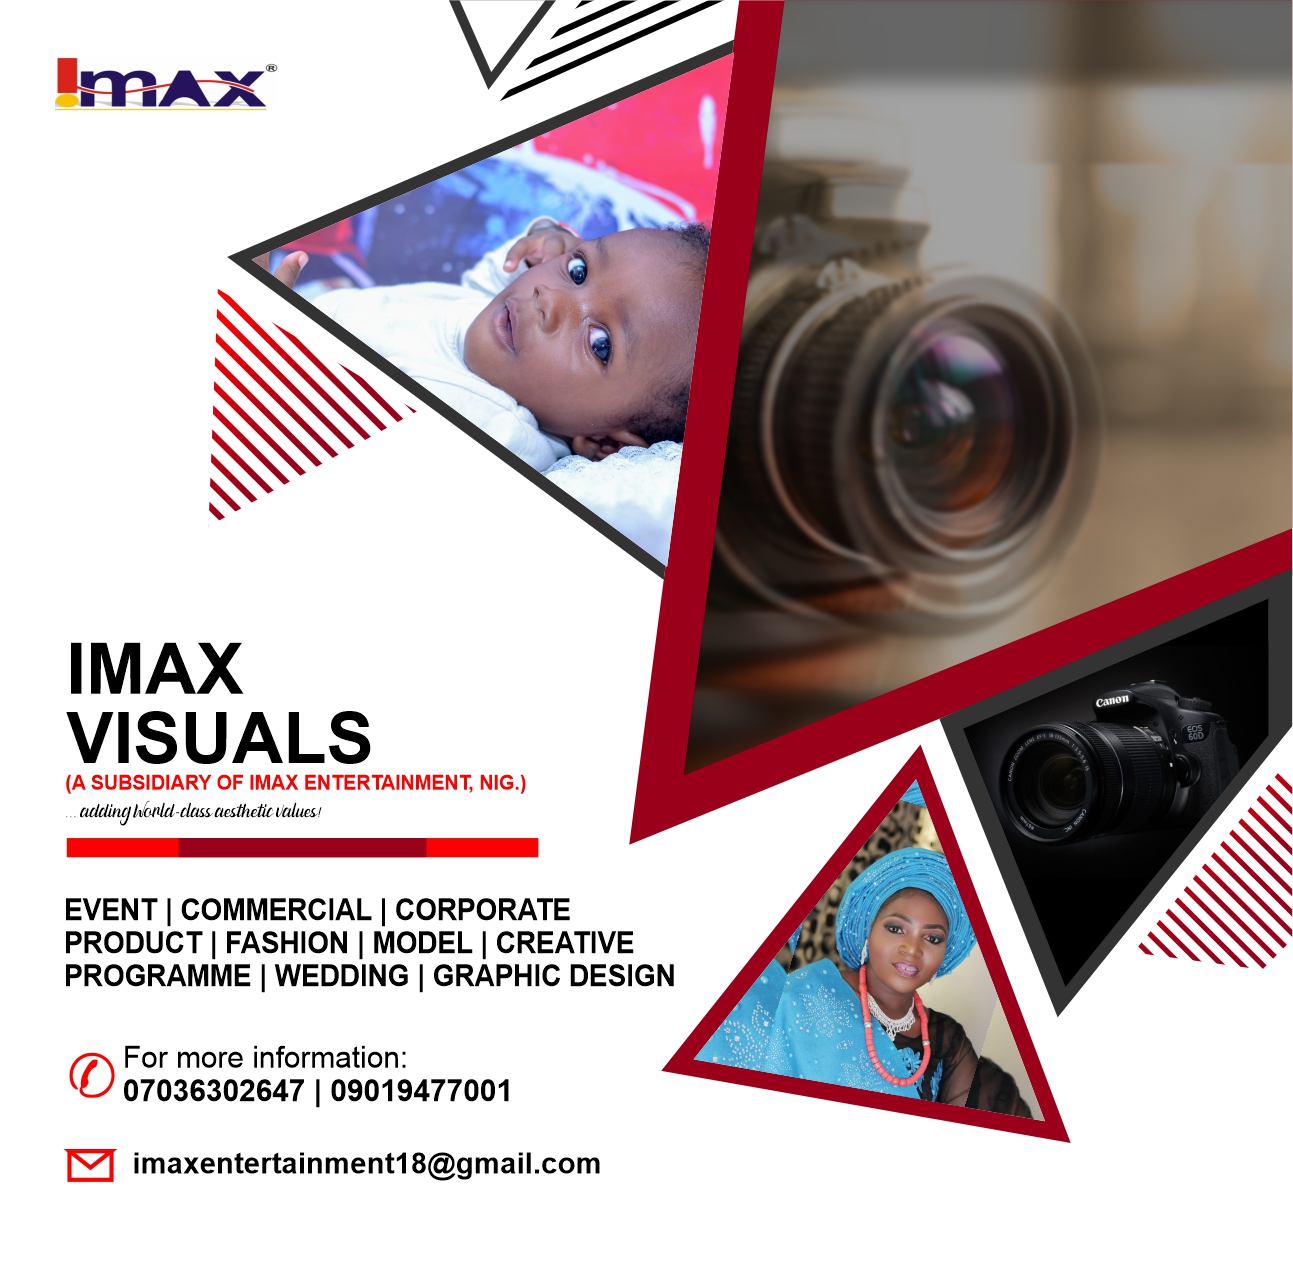 IMAX VISUALS 2